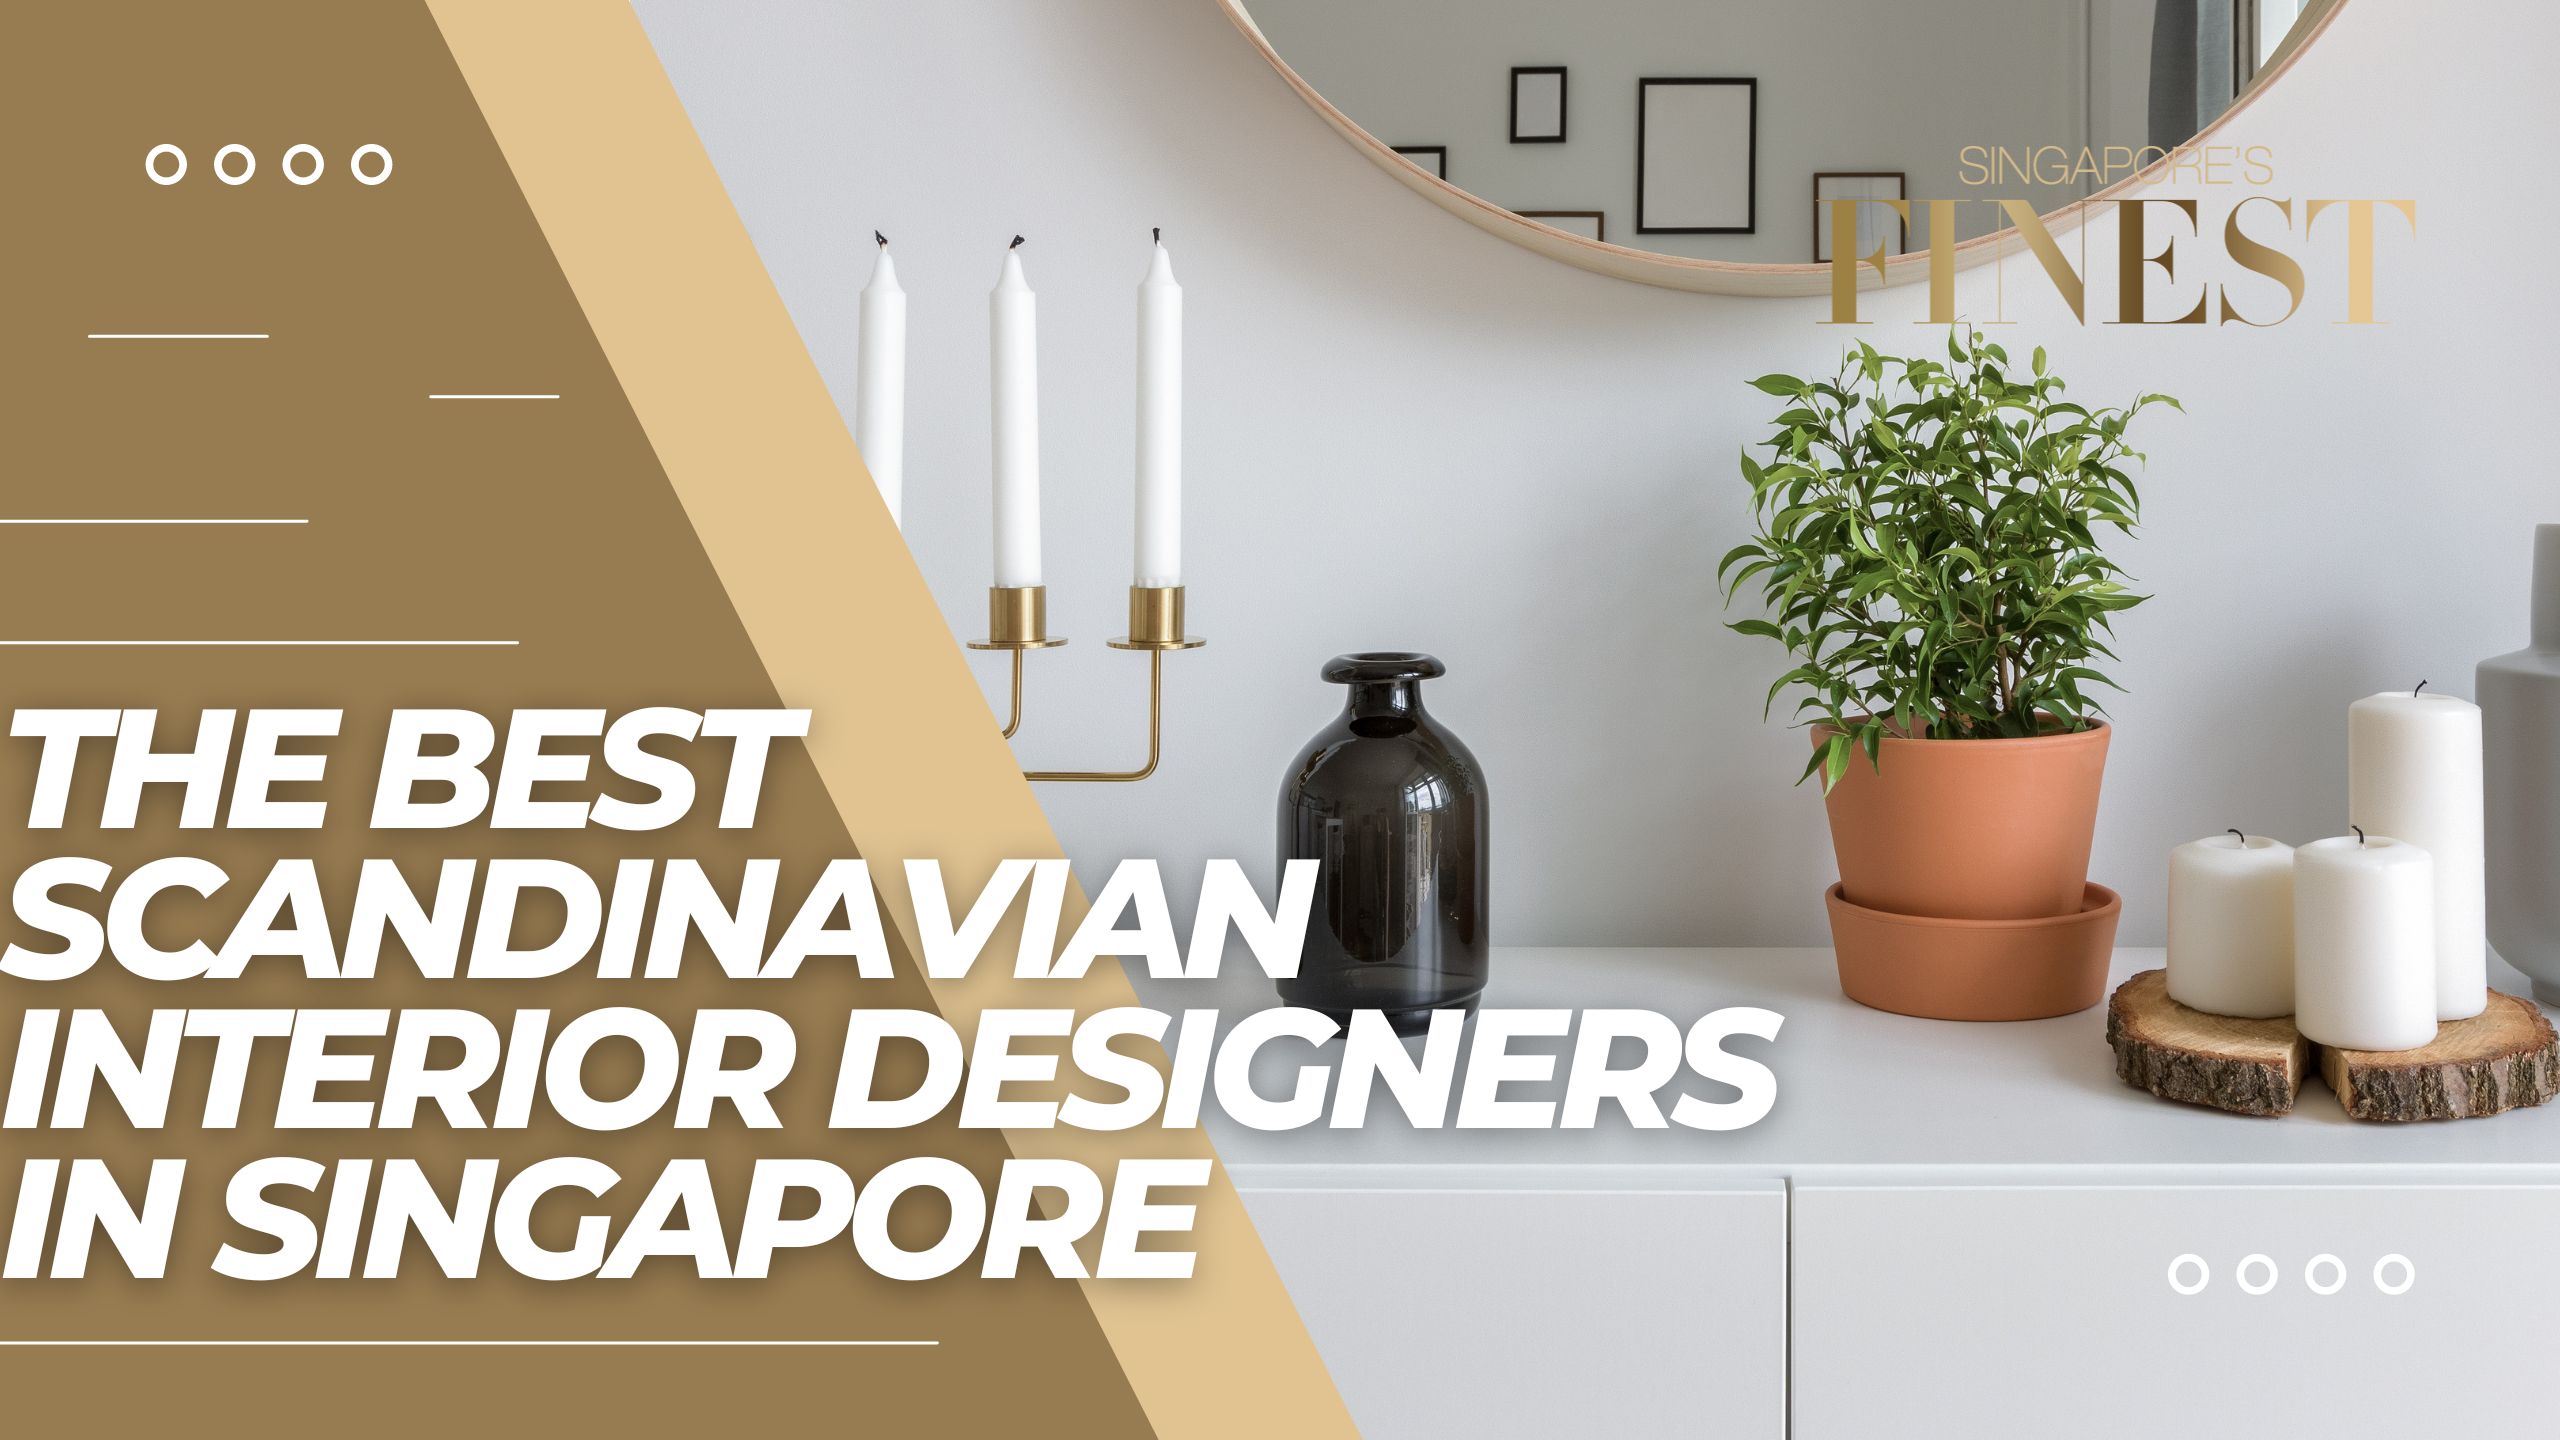 The Finest Scandinavian Interior Designers in Singapore